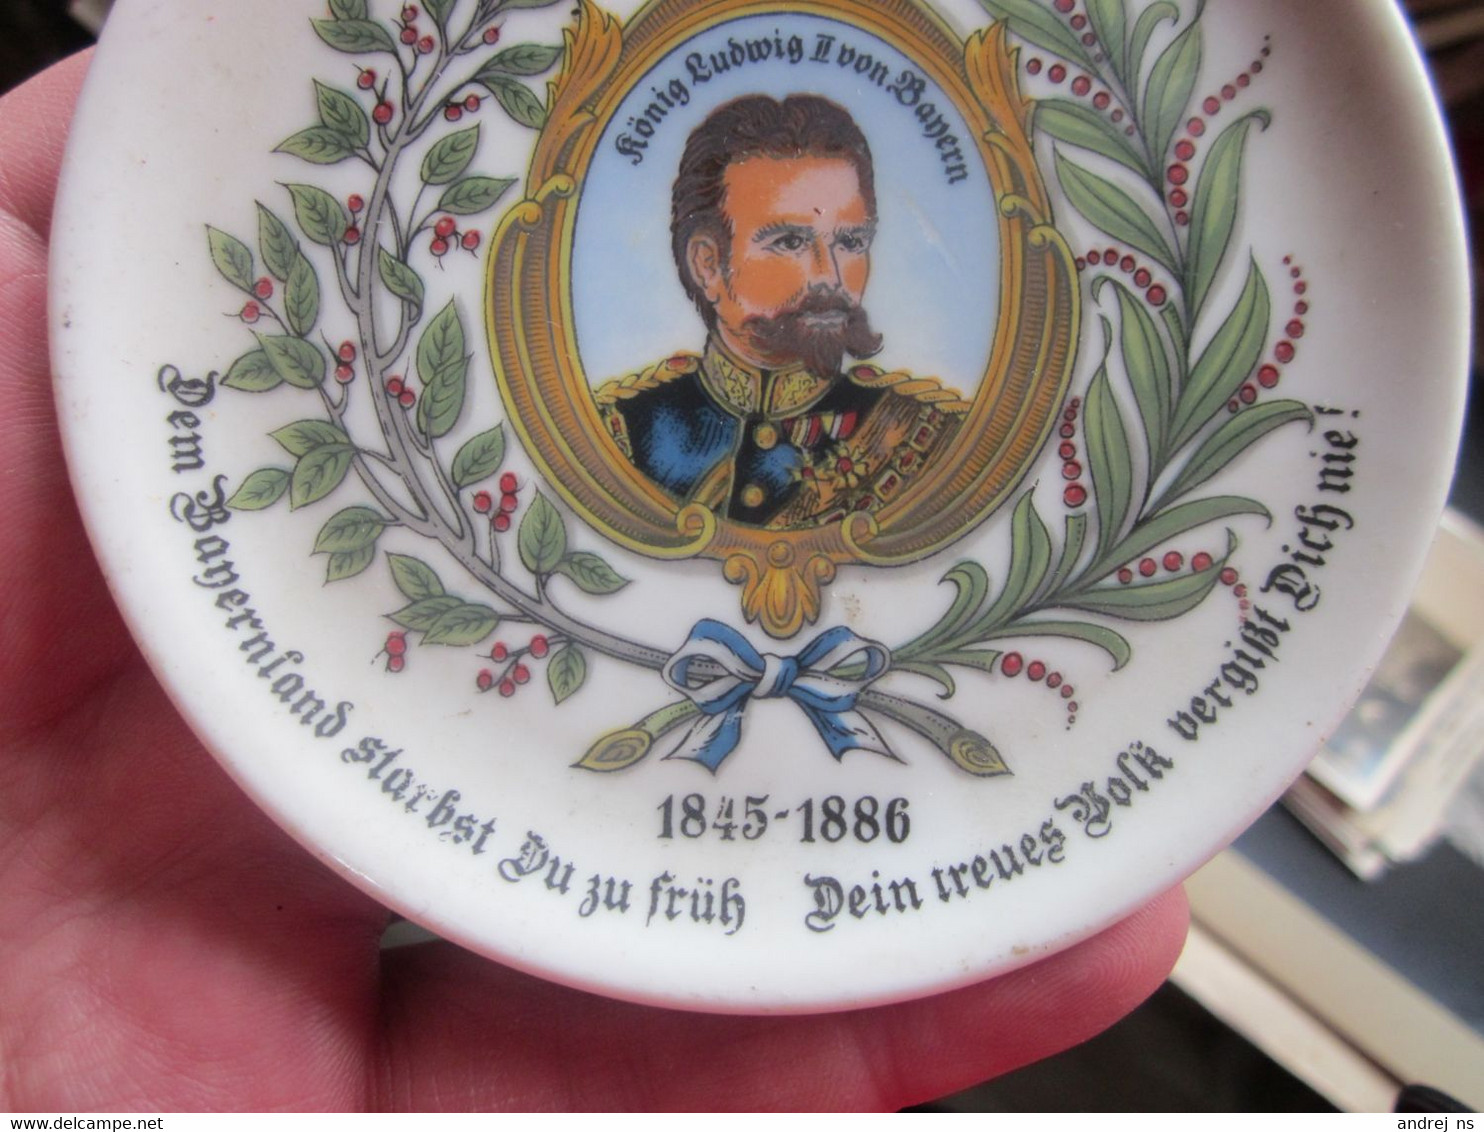 Old Decorative Plate Konigreich Bayern Konig Ludwig II Von Bayern 1845 1886 Diameter 10 Cm - Piatti